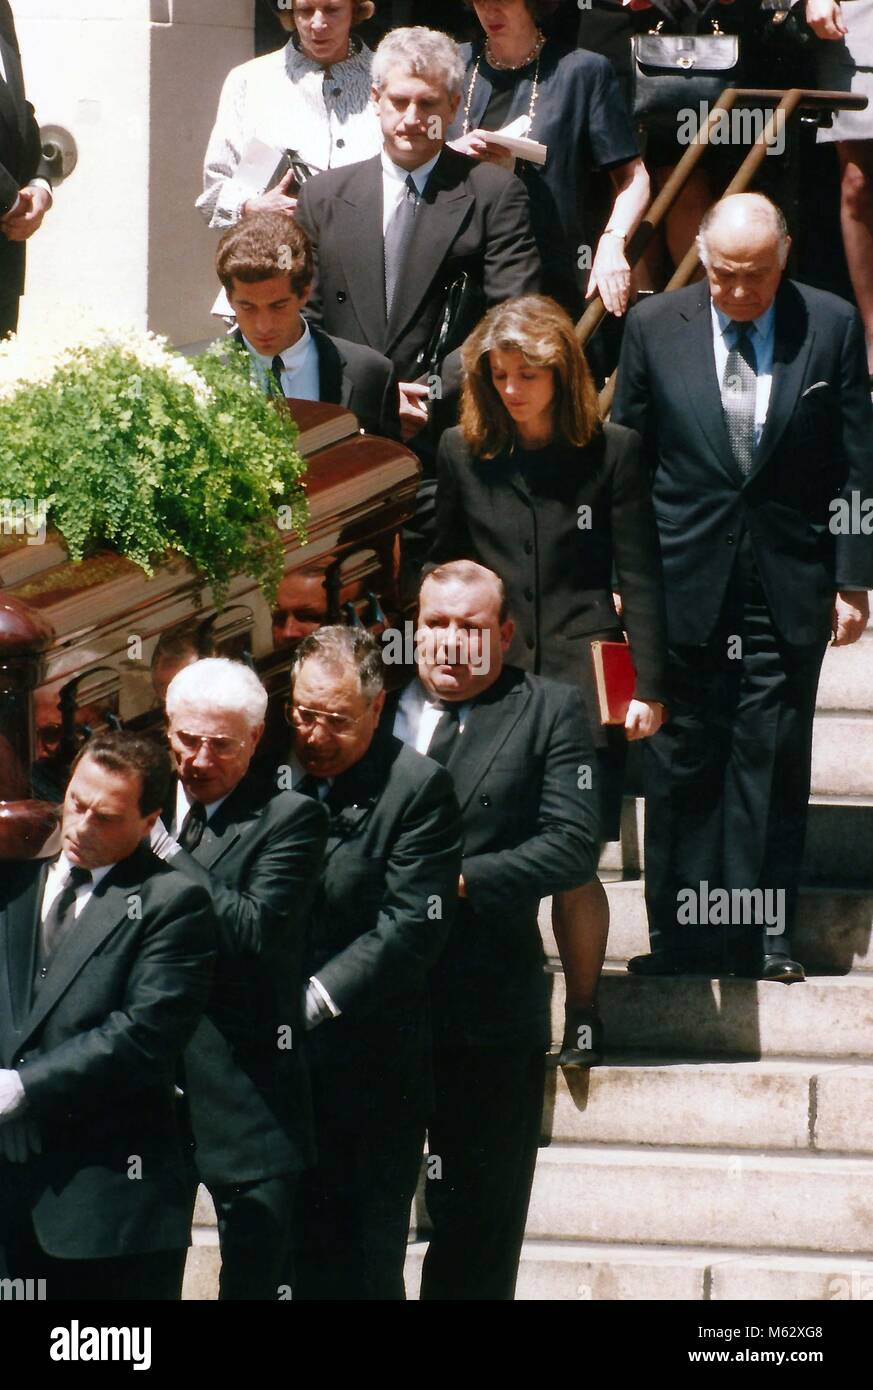 Jackie Kennedy Funeral